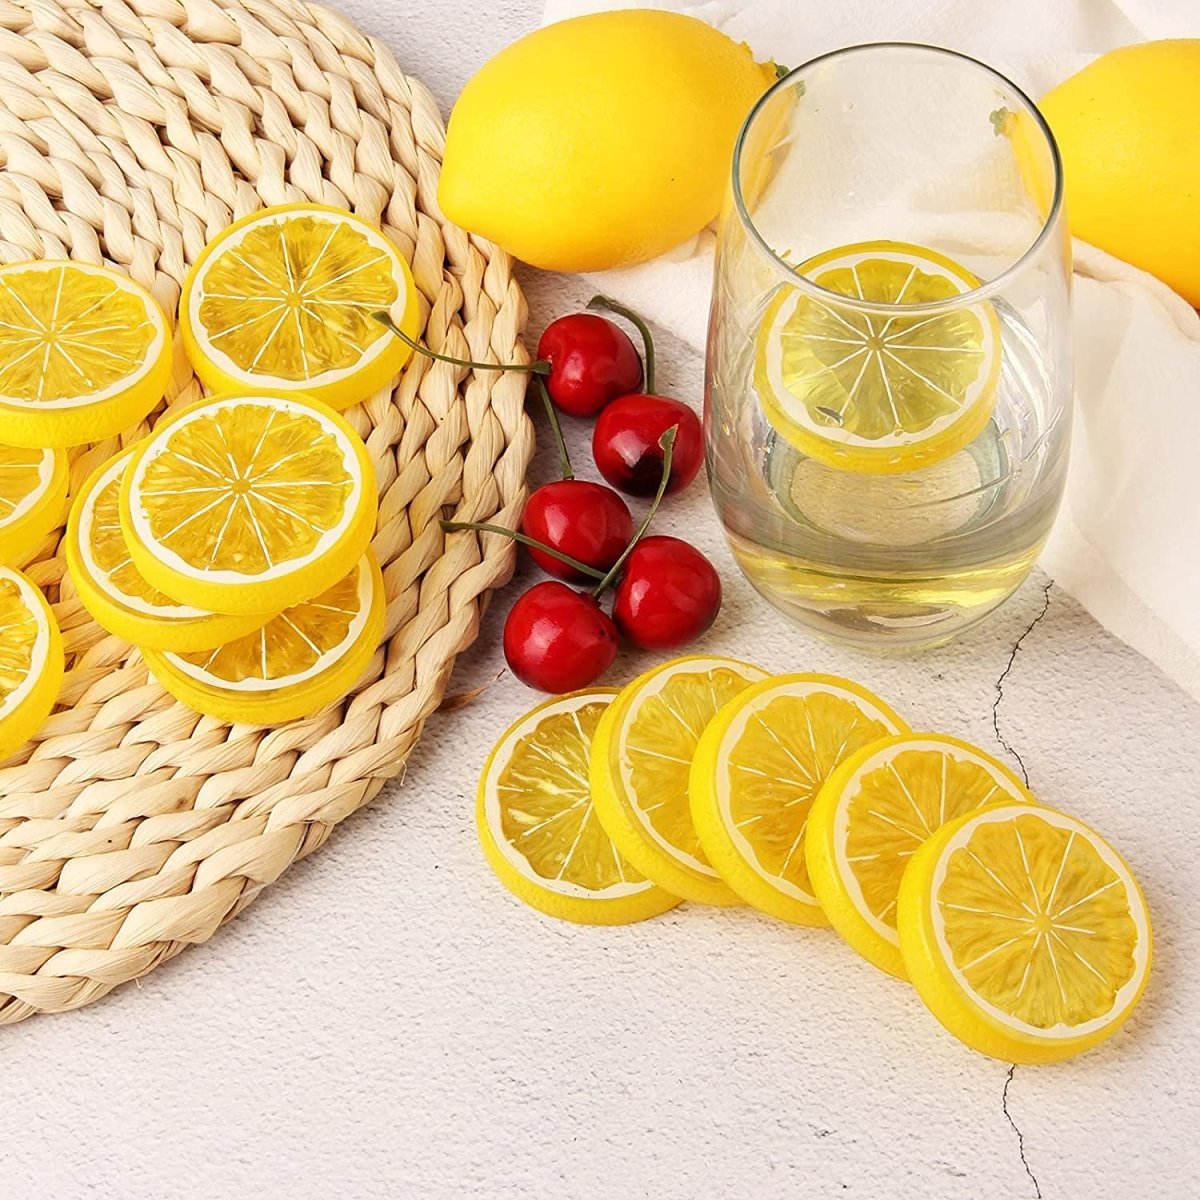 20pcs Mini Fruit Fake Lemon Slices| Artificial Plastic Fruit Model | Photography Props Basket Display photography props- #Royalkart#colour props